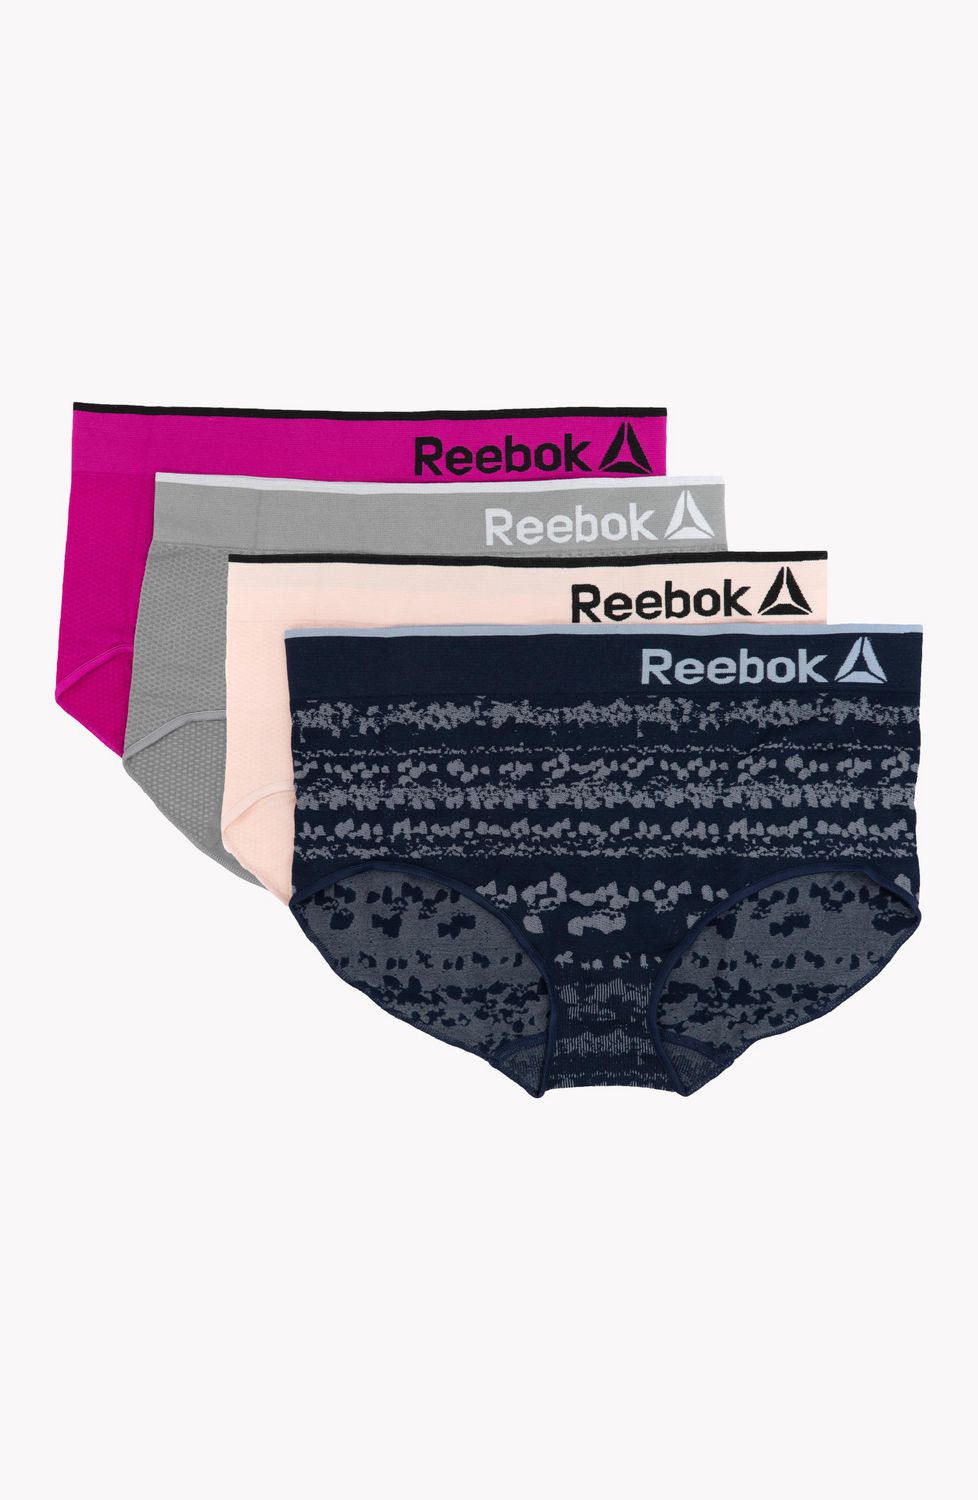 Reebok Seamless Panties - 4-Pack, Briefs - Save 48%